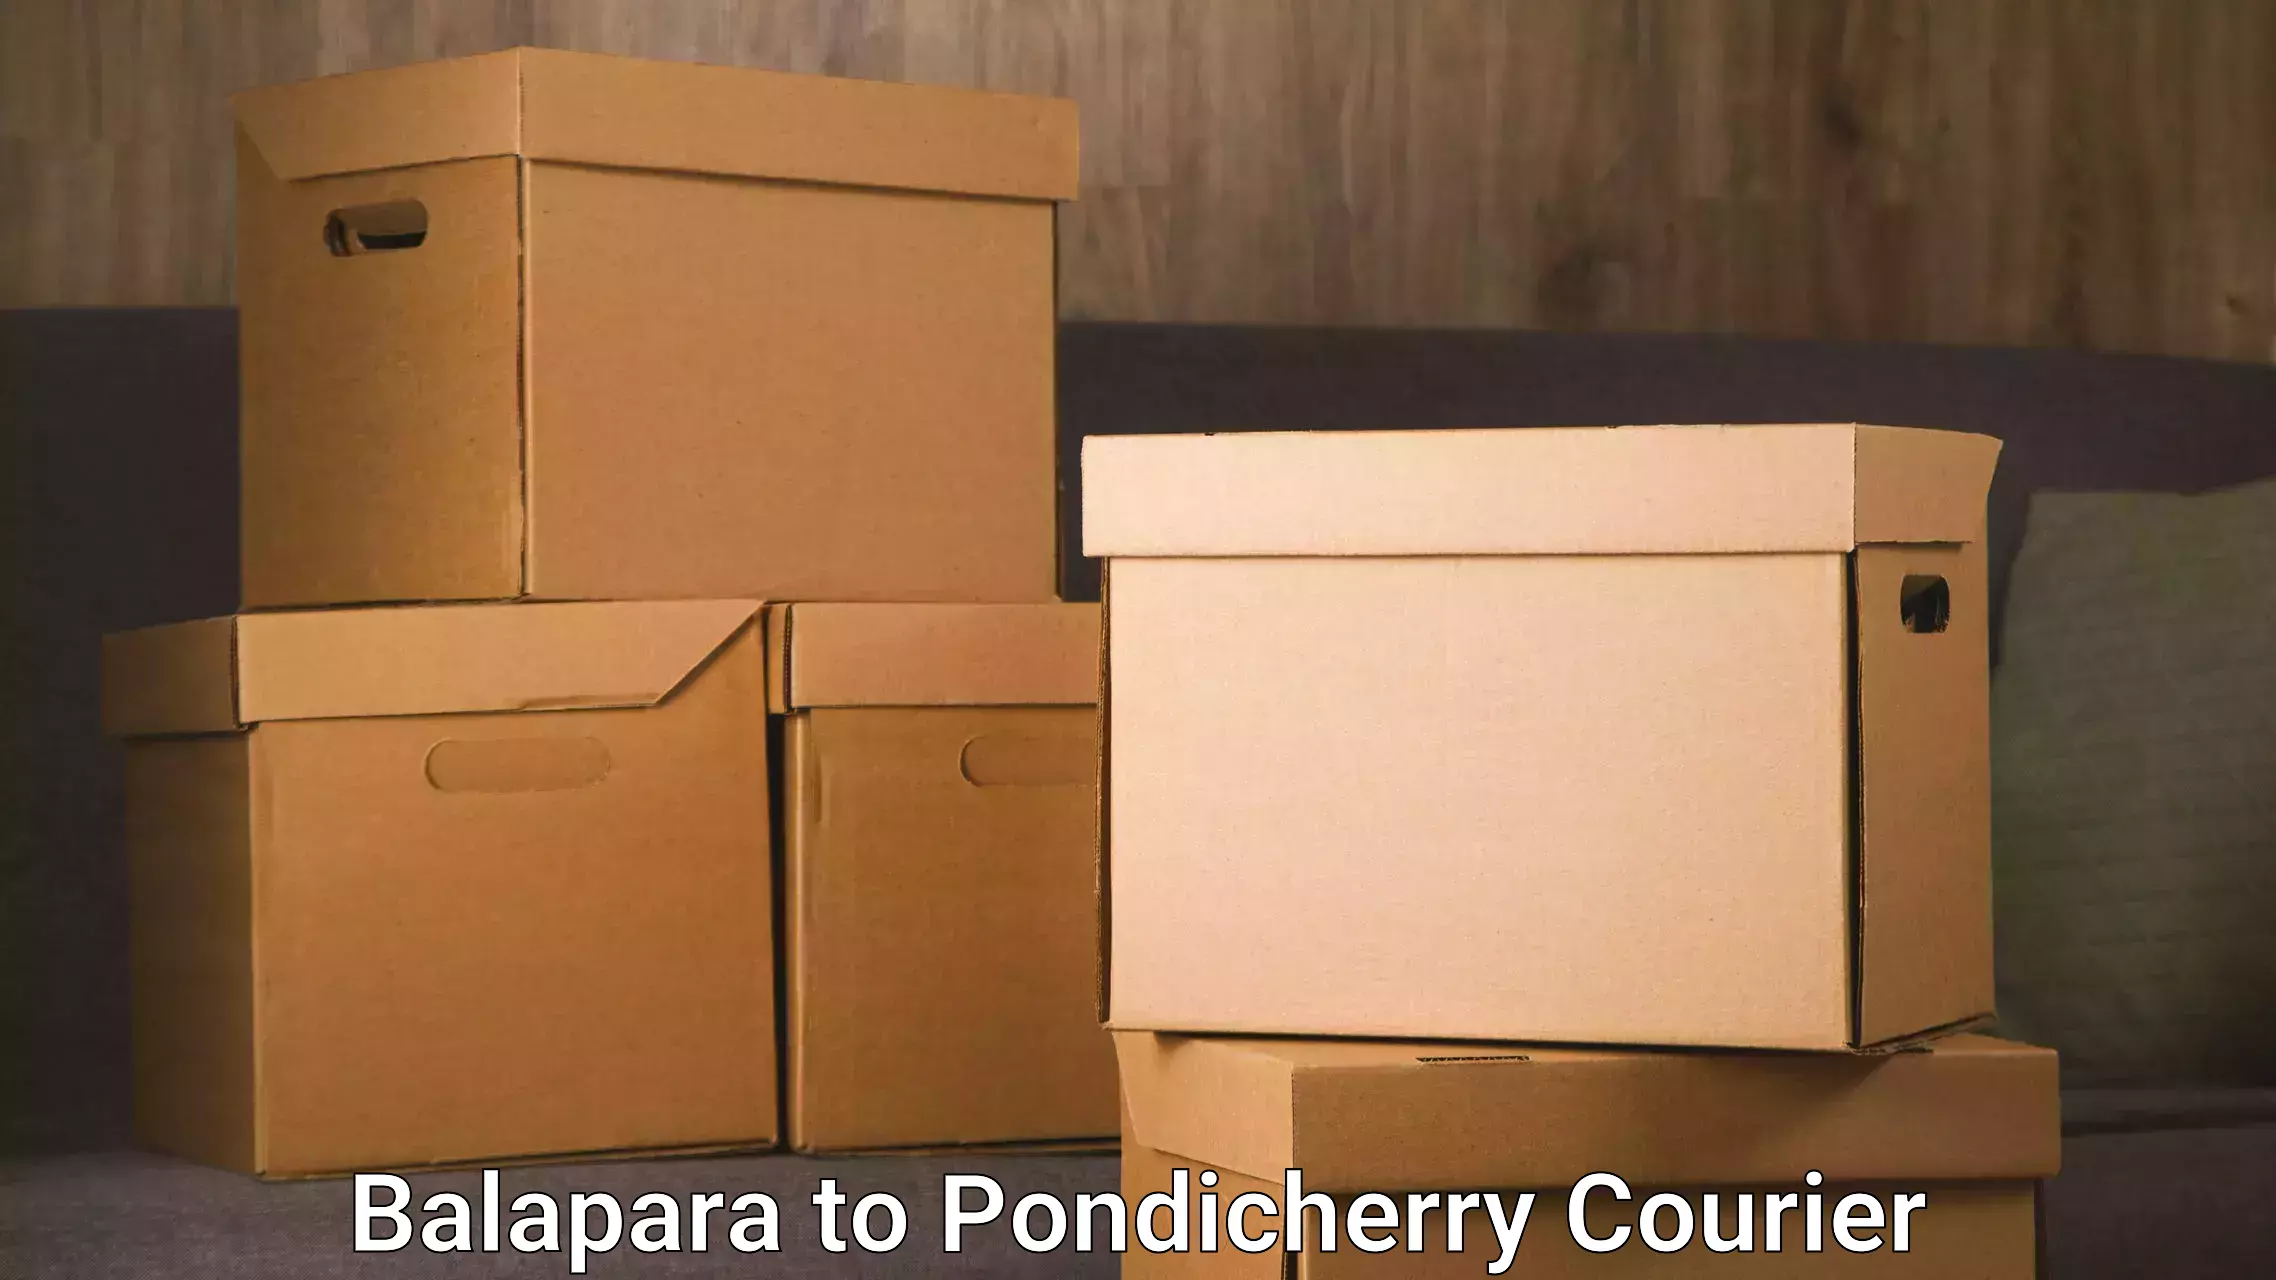 Courier service innovation Balapara to Pondicherry